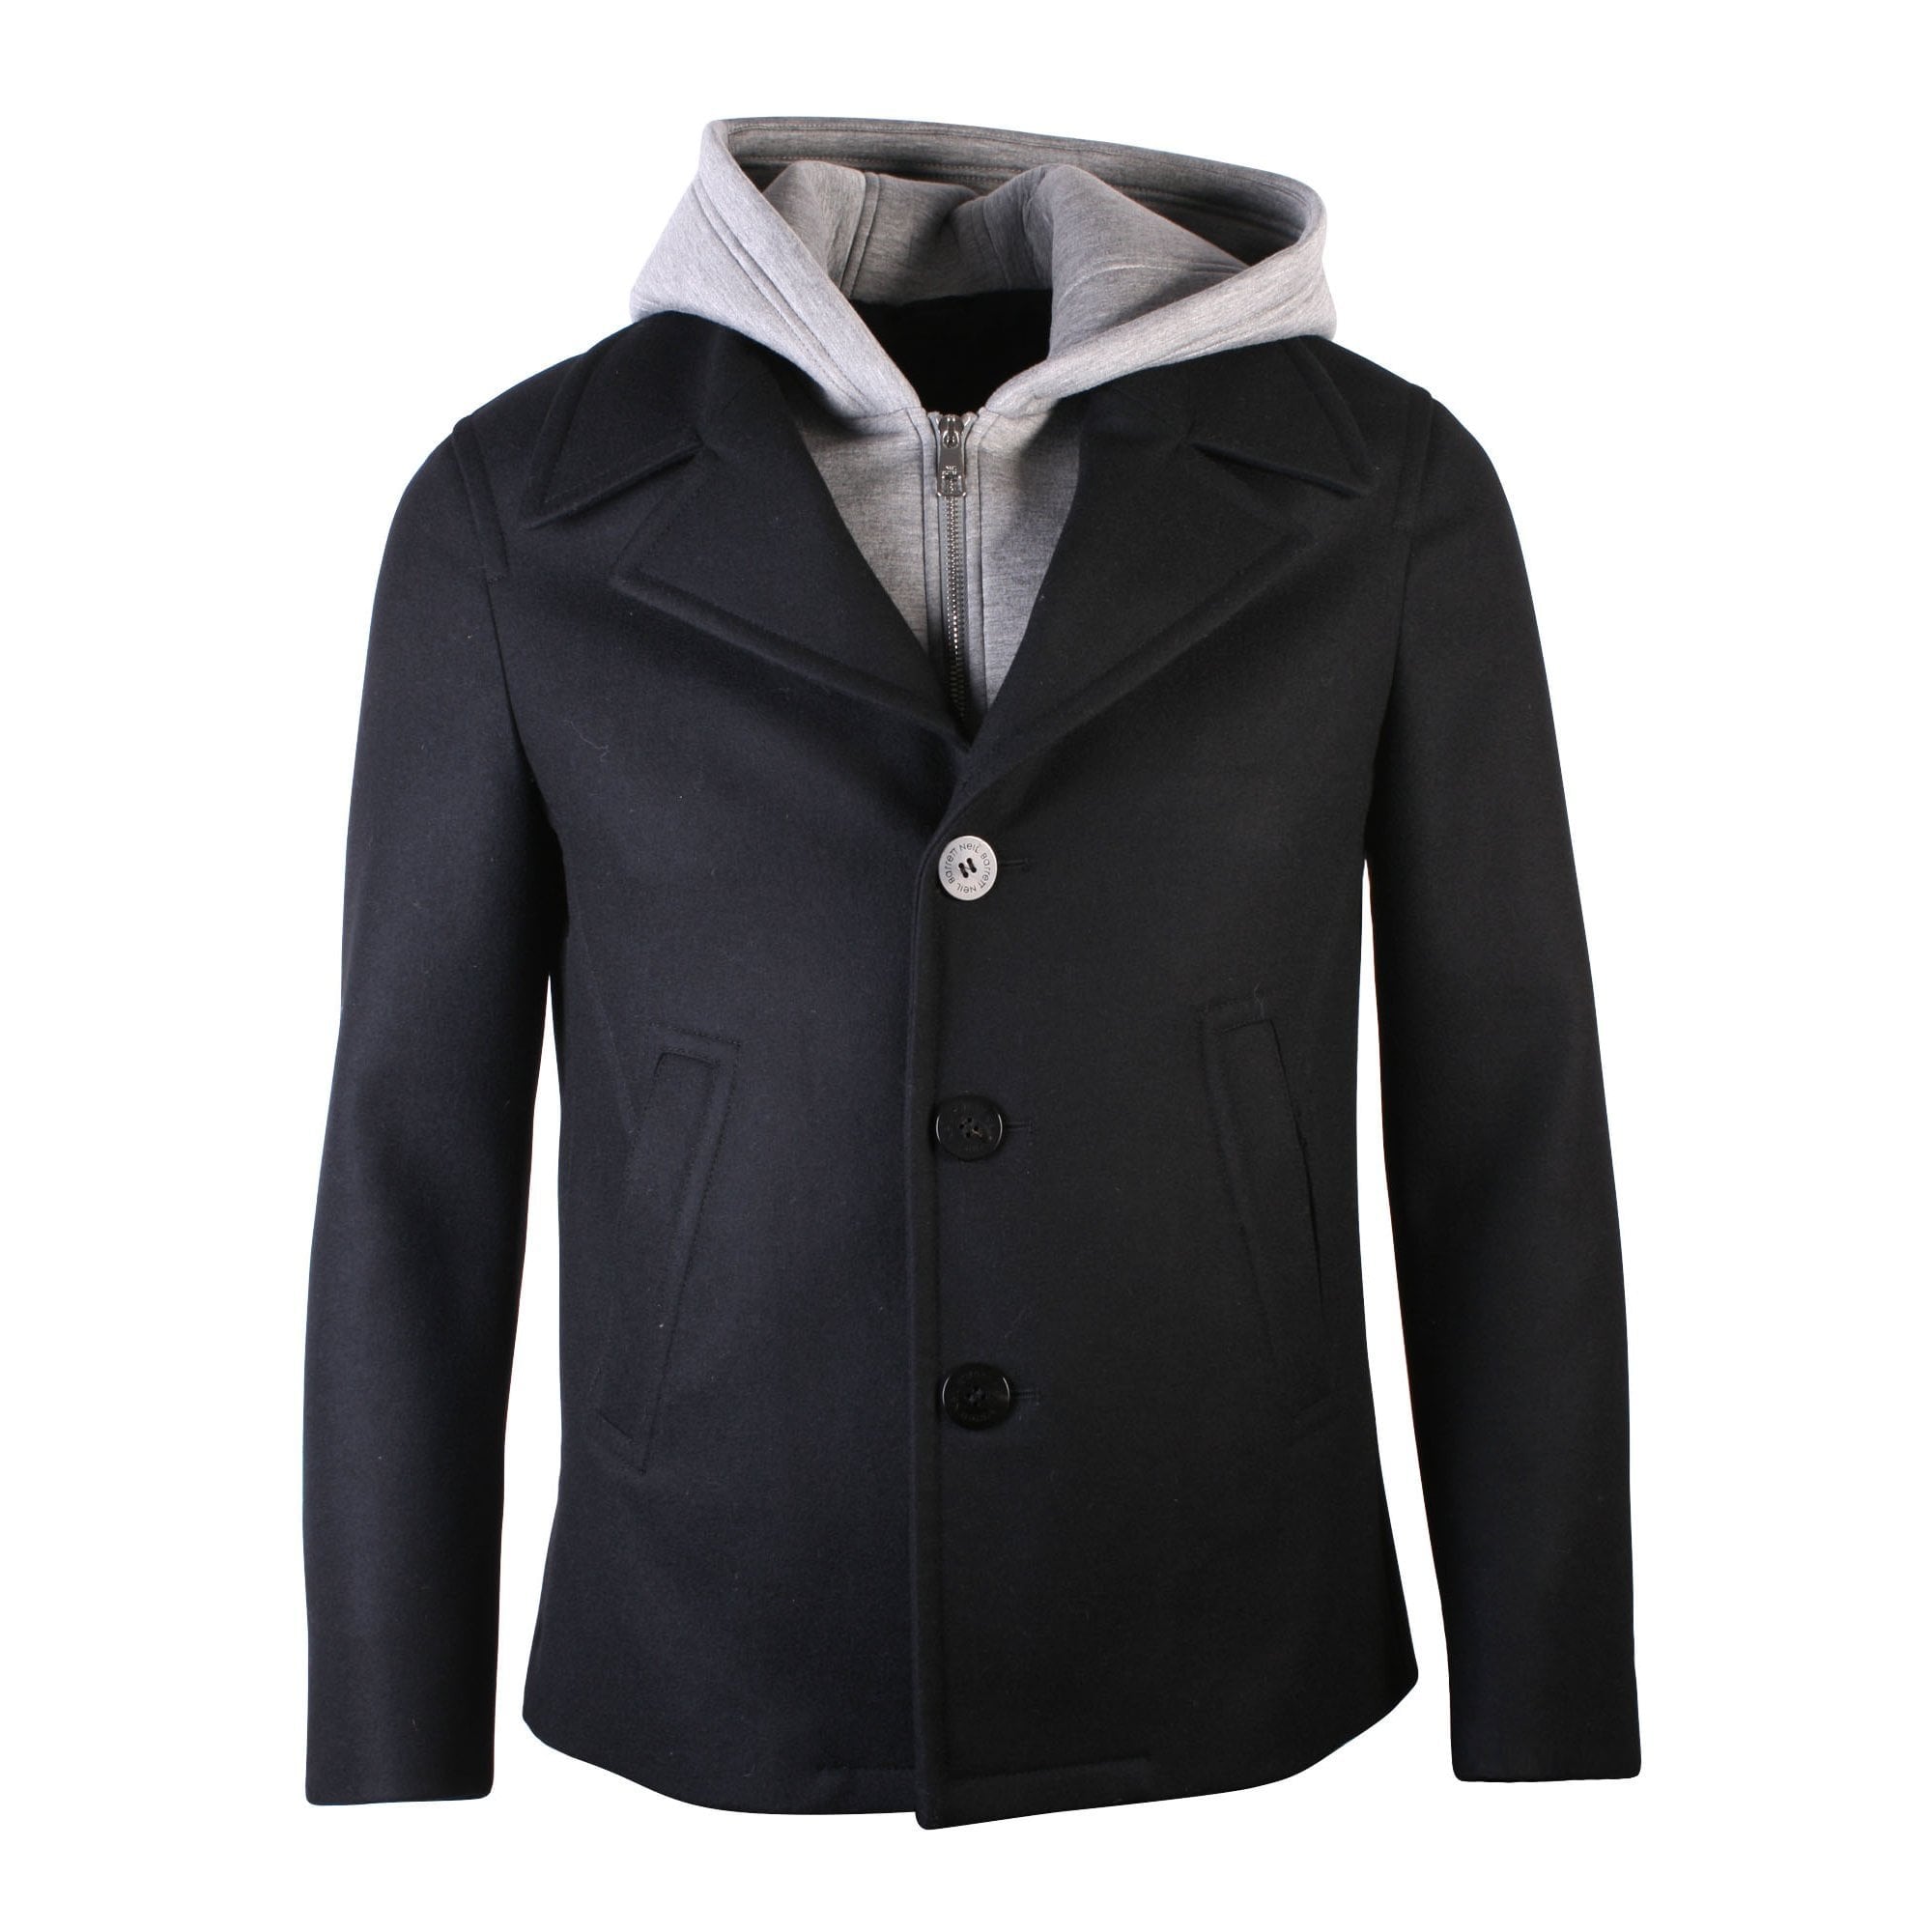 Neil Barrett Men's Layered Hooded Jacket Black/Grey - BLACK S